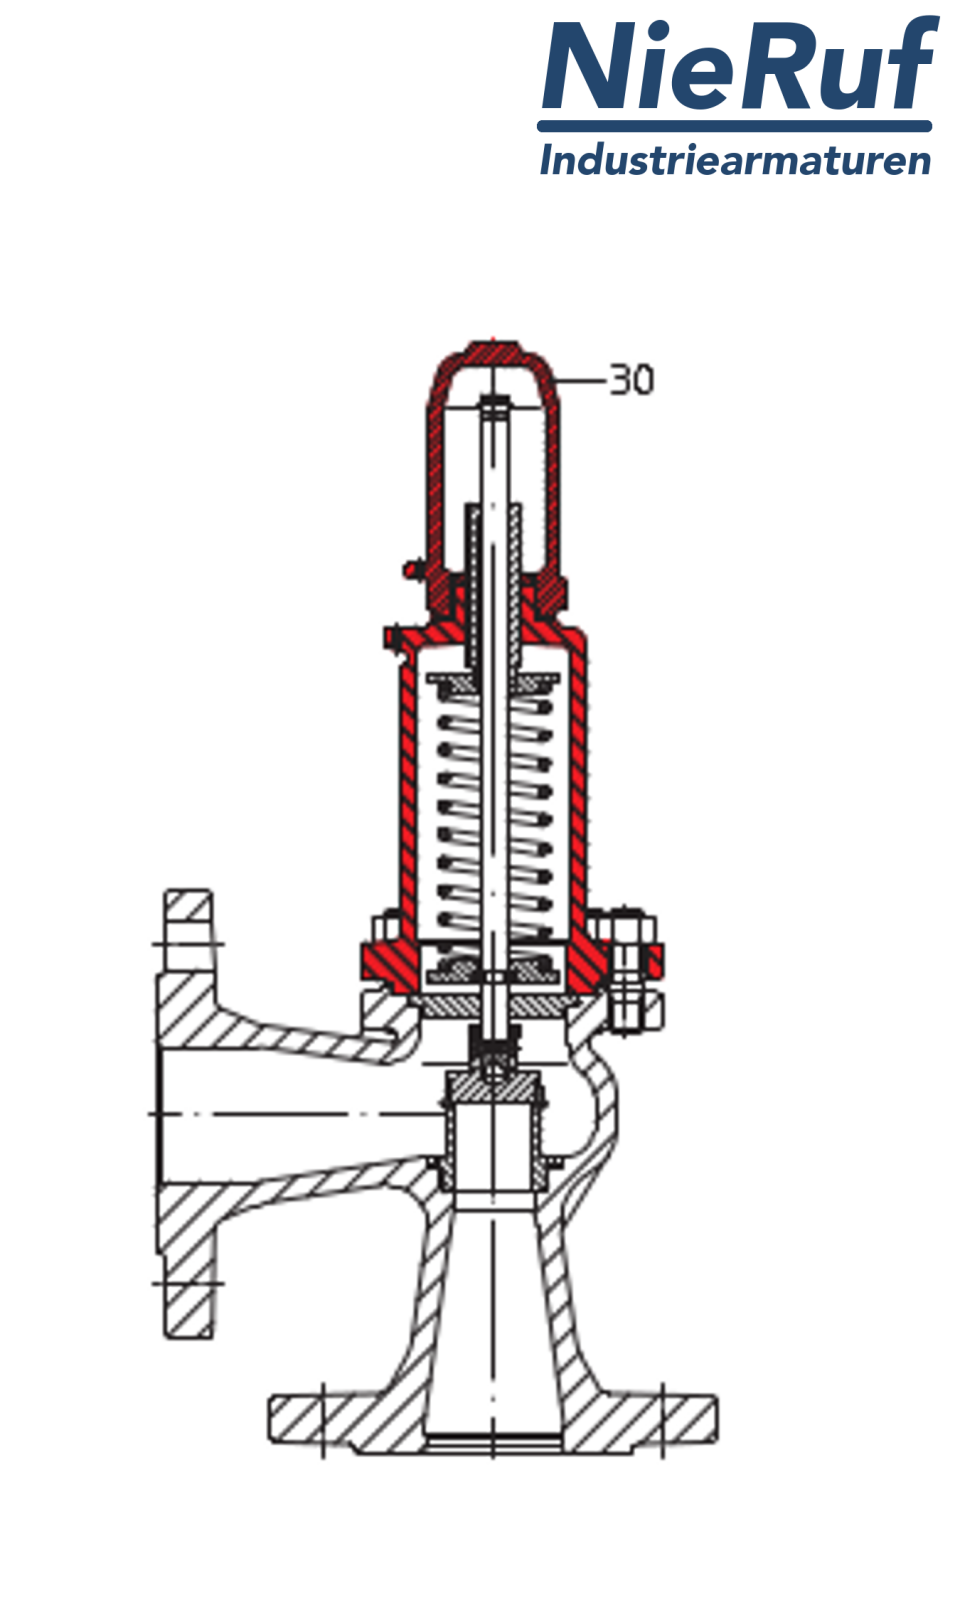 flange-safety valve DN15/DN15 SF0201, cast steel 1.0619+N FPM, without lever